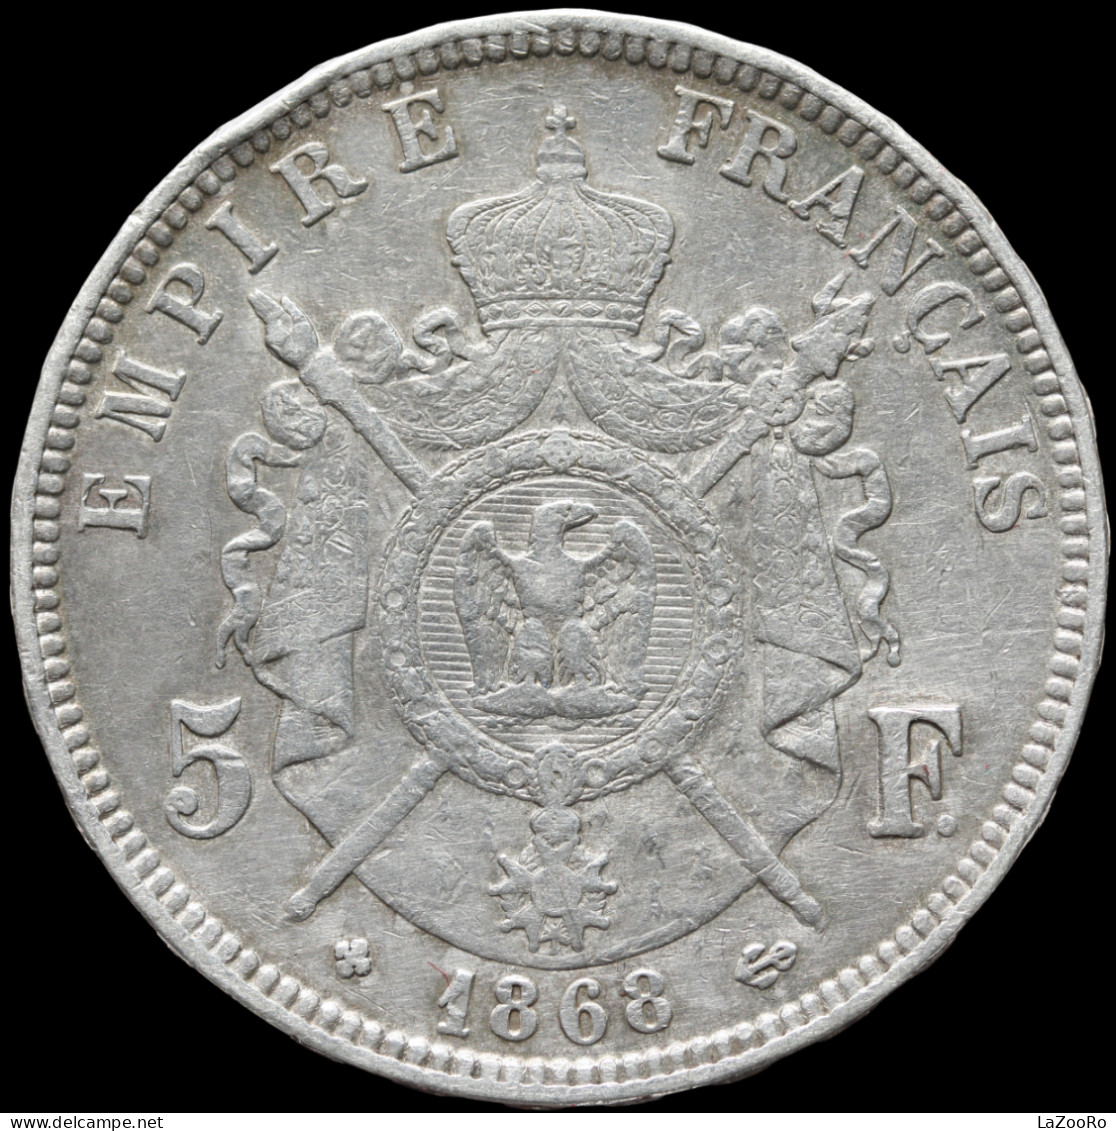 LaZooRo: France 5 Francs 1868 BB VF / XF - Silver - 5 Francs